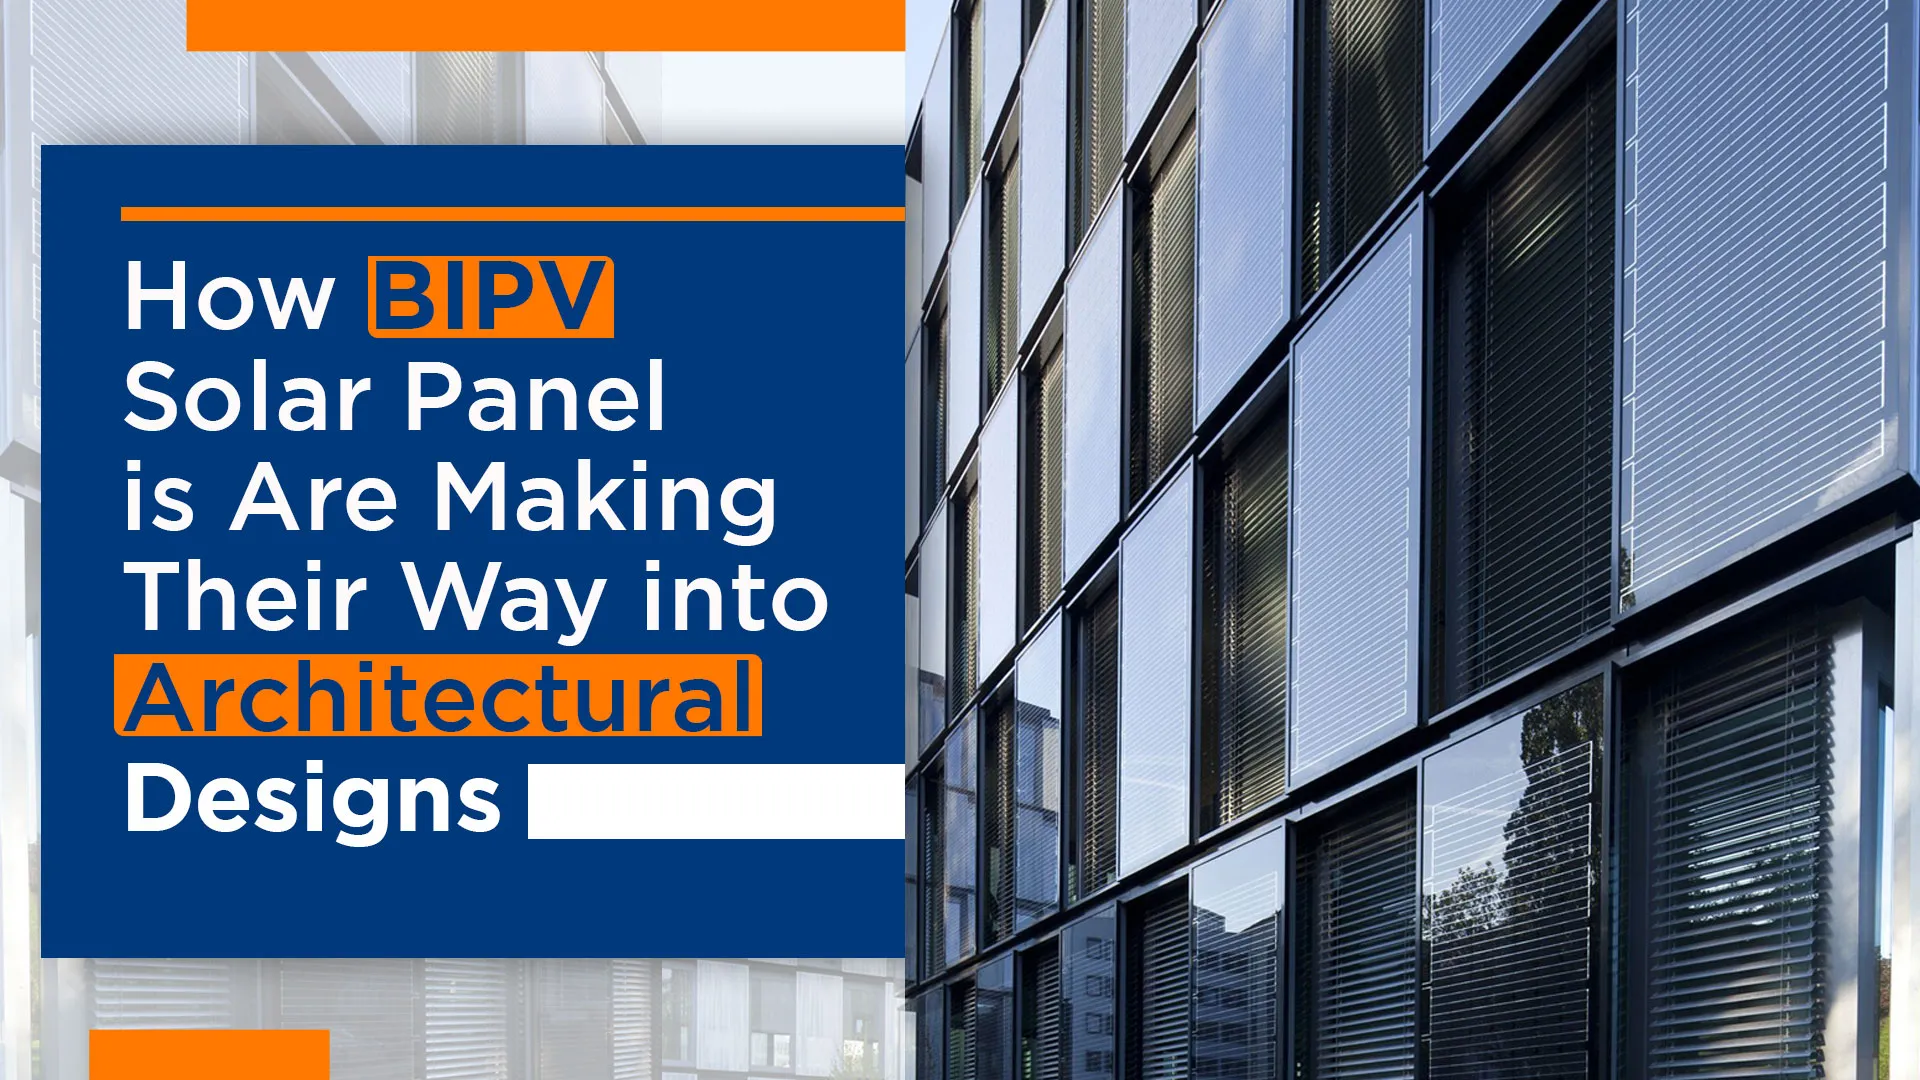 Bipv Solar Panels The Future Of Building Architecture